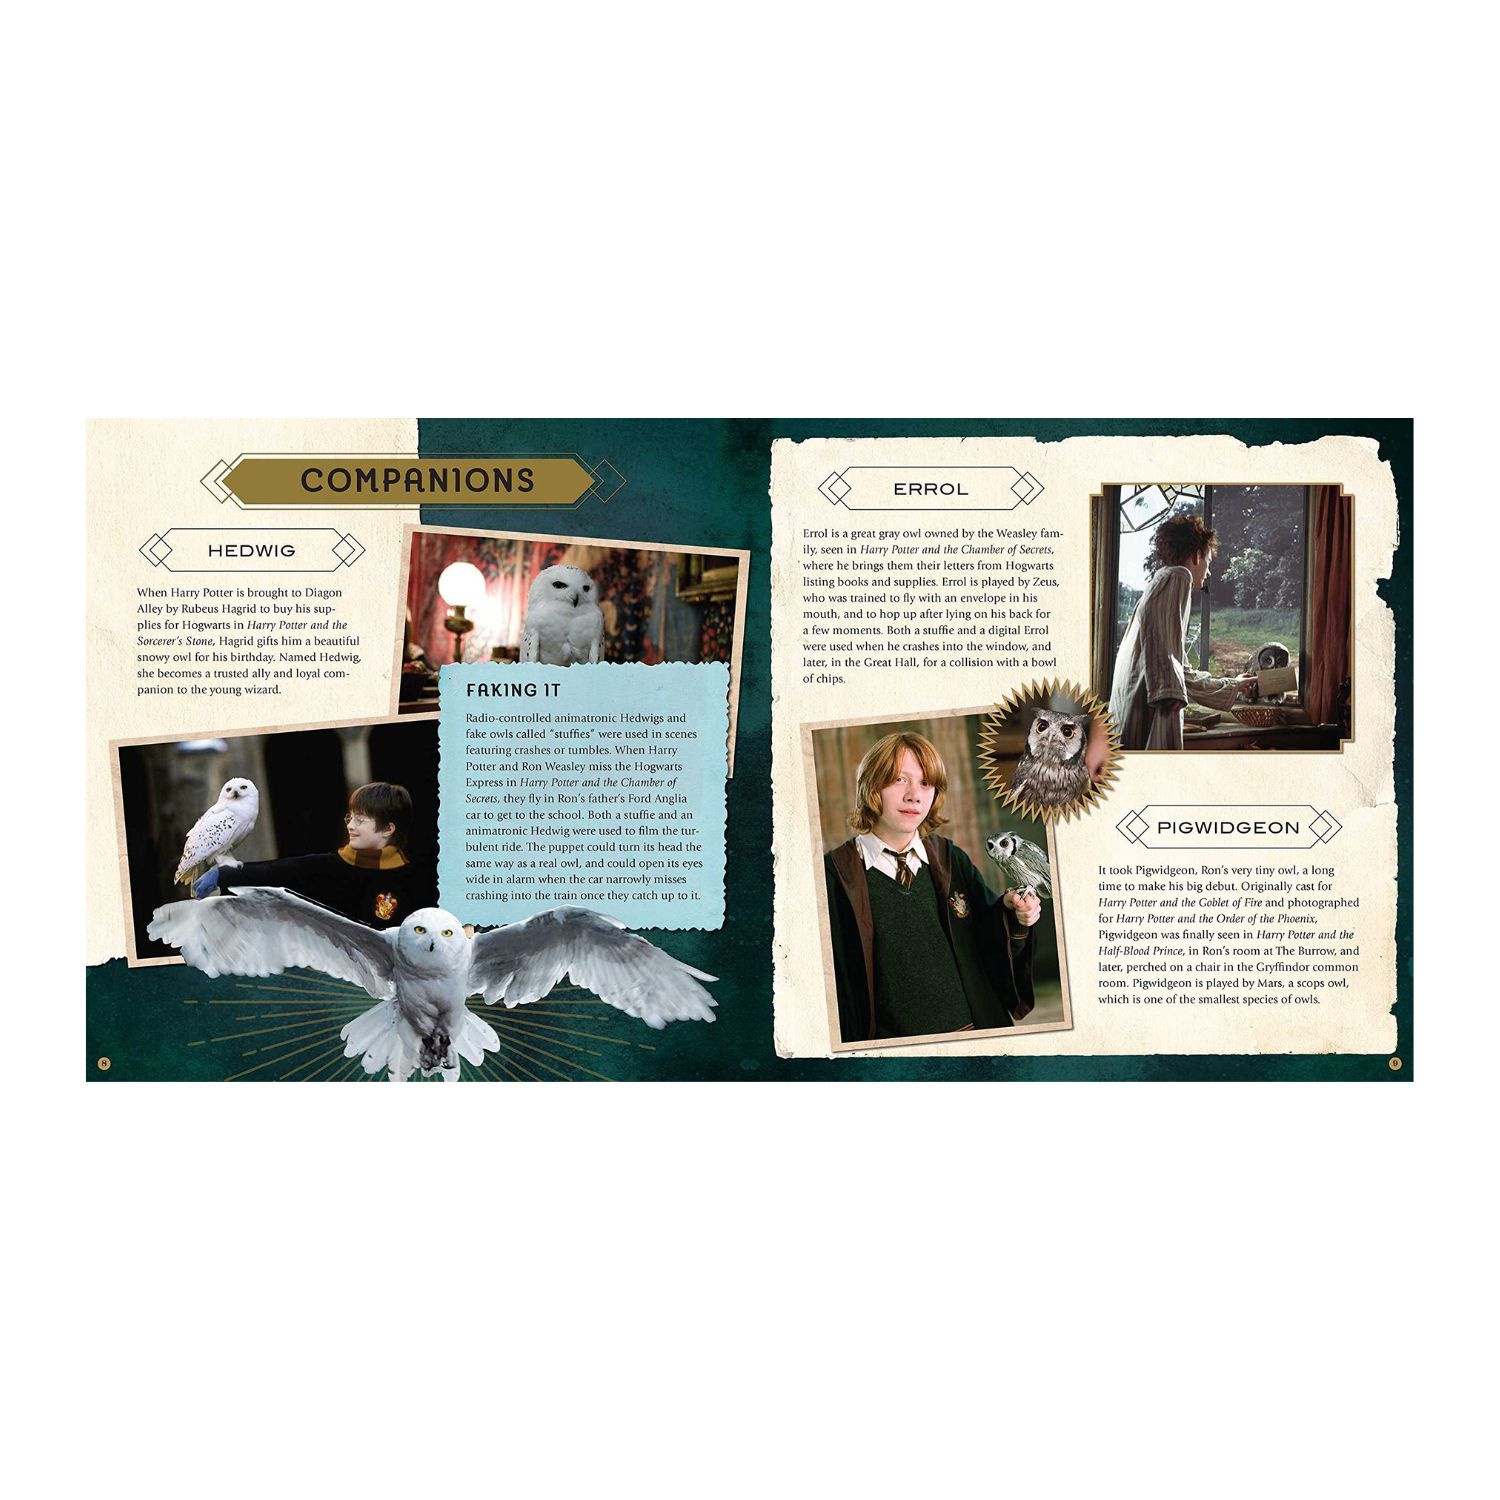 Harry Potter: Magical Creatures: A Movie Scrapbook [Book]